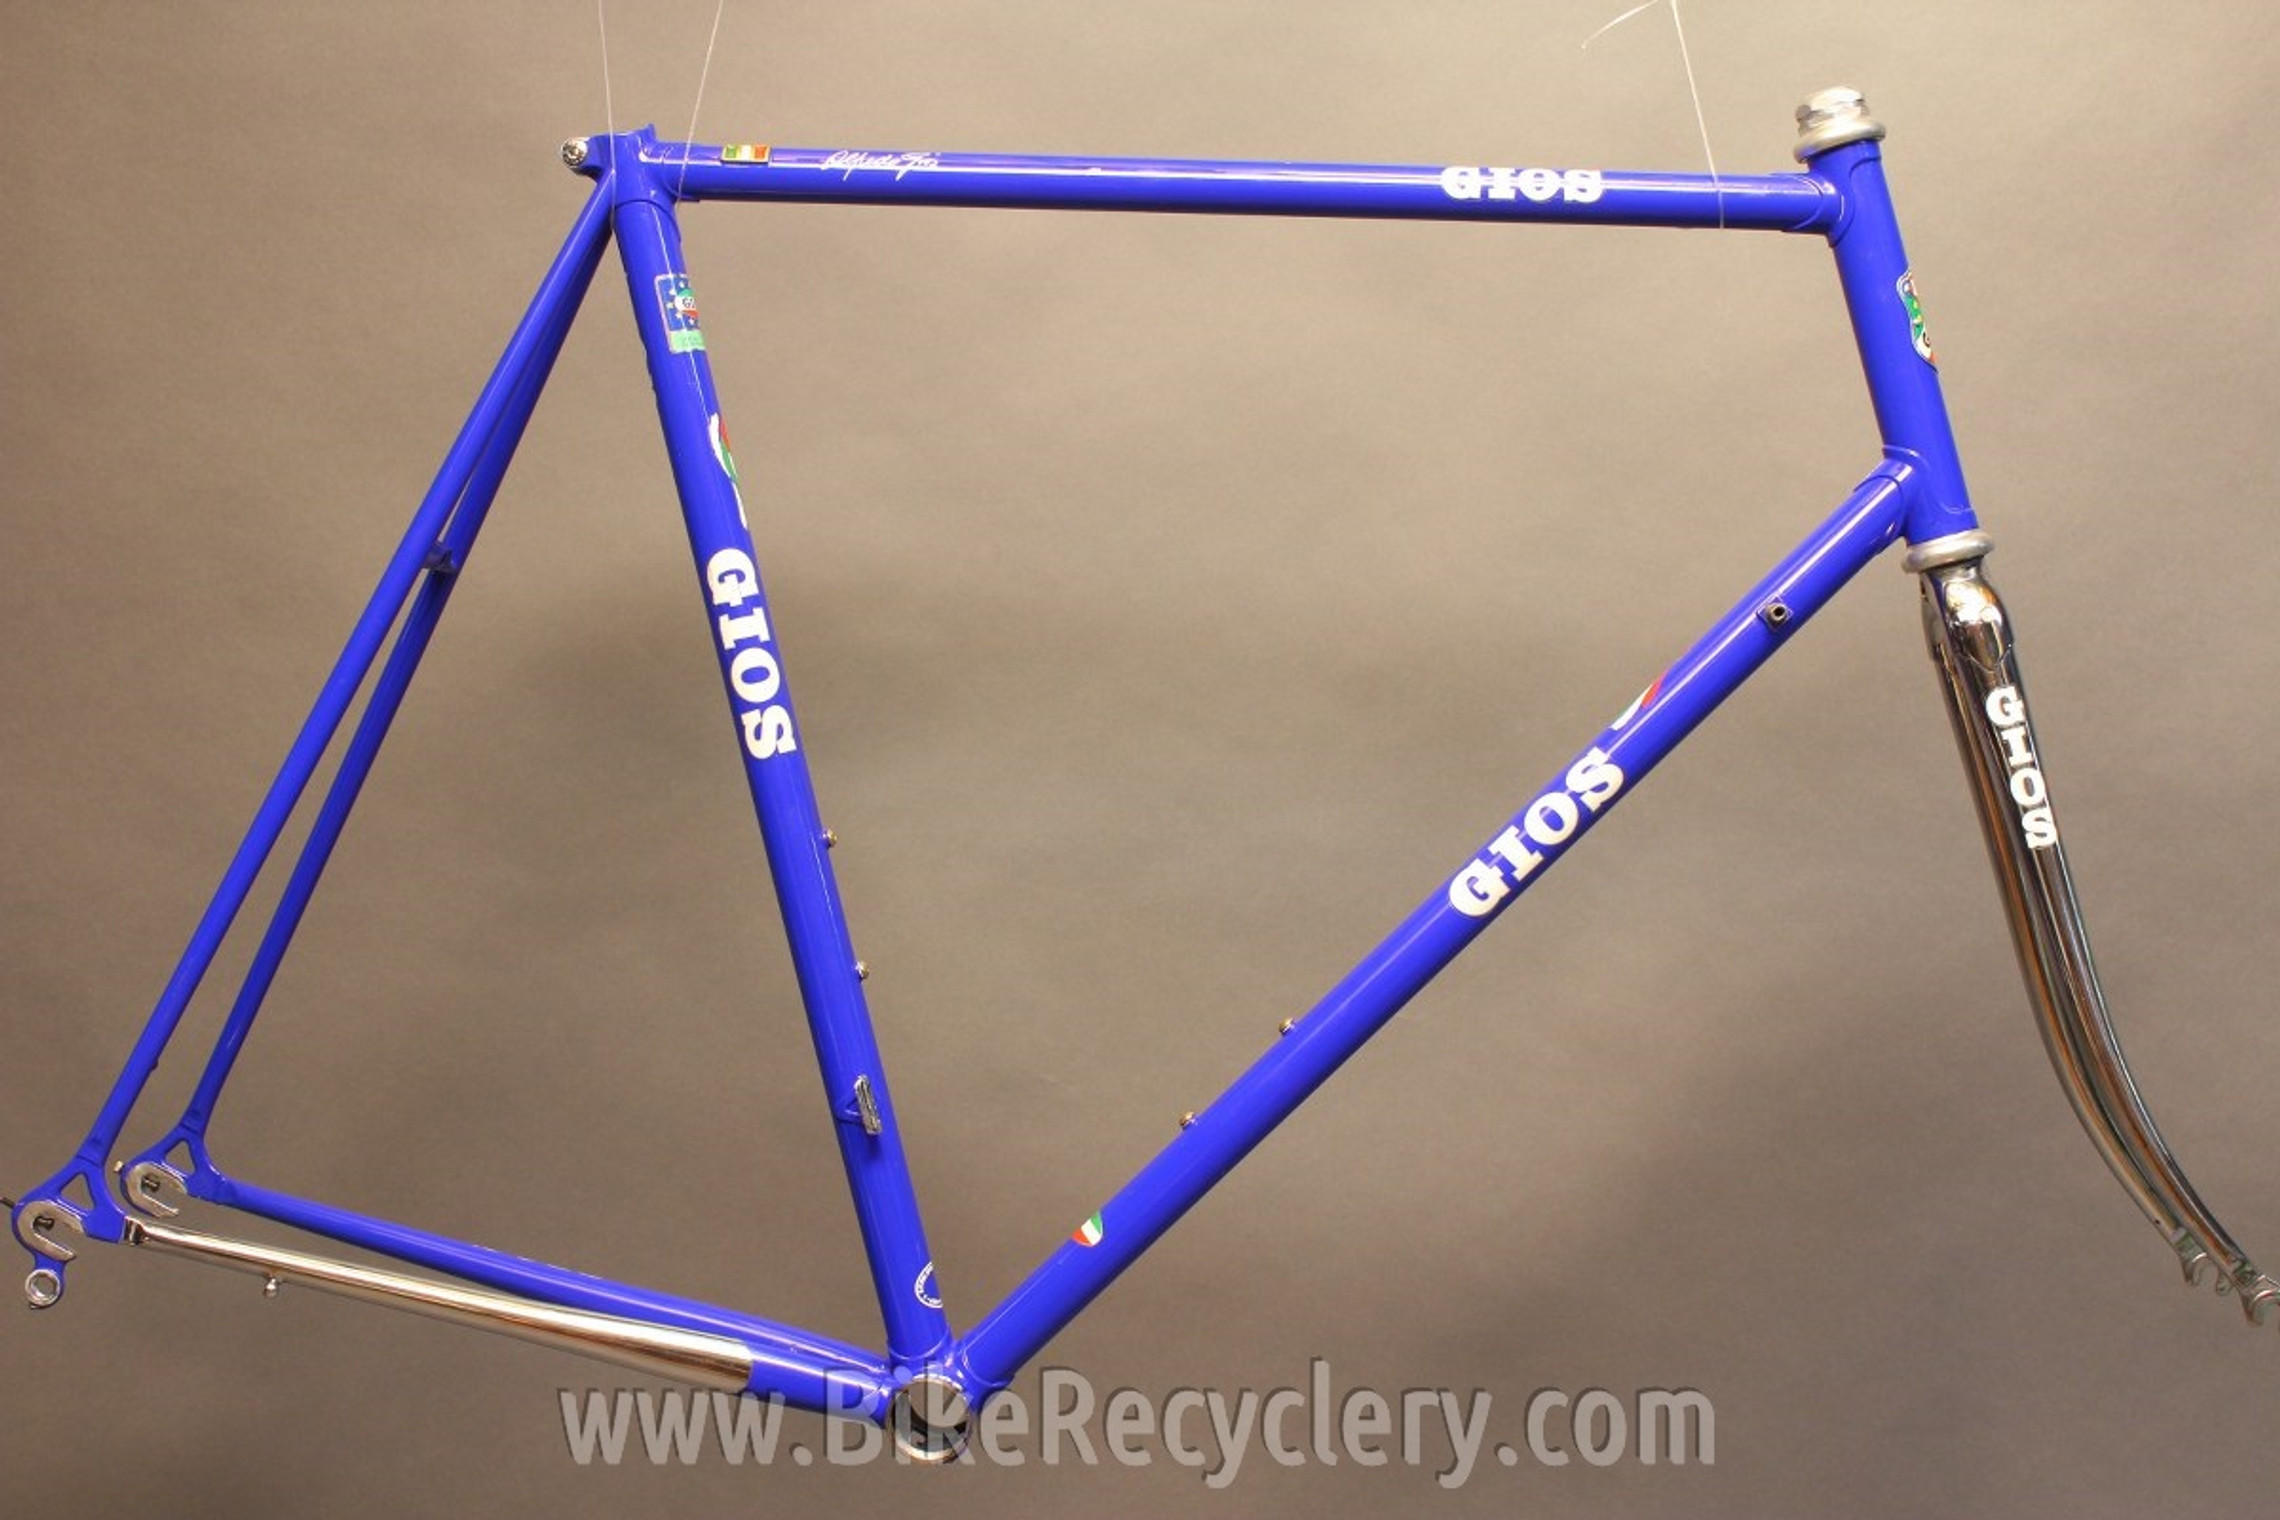 60 cm bike frame